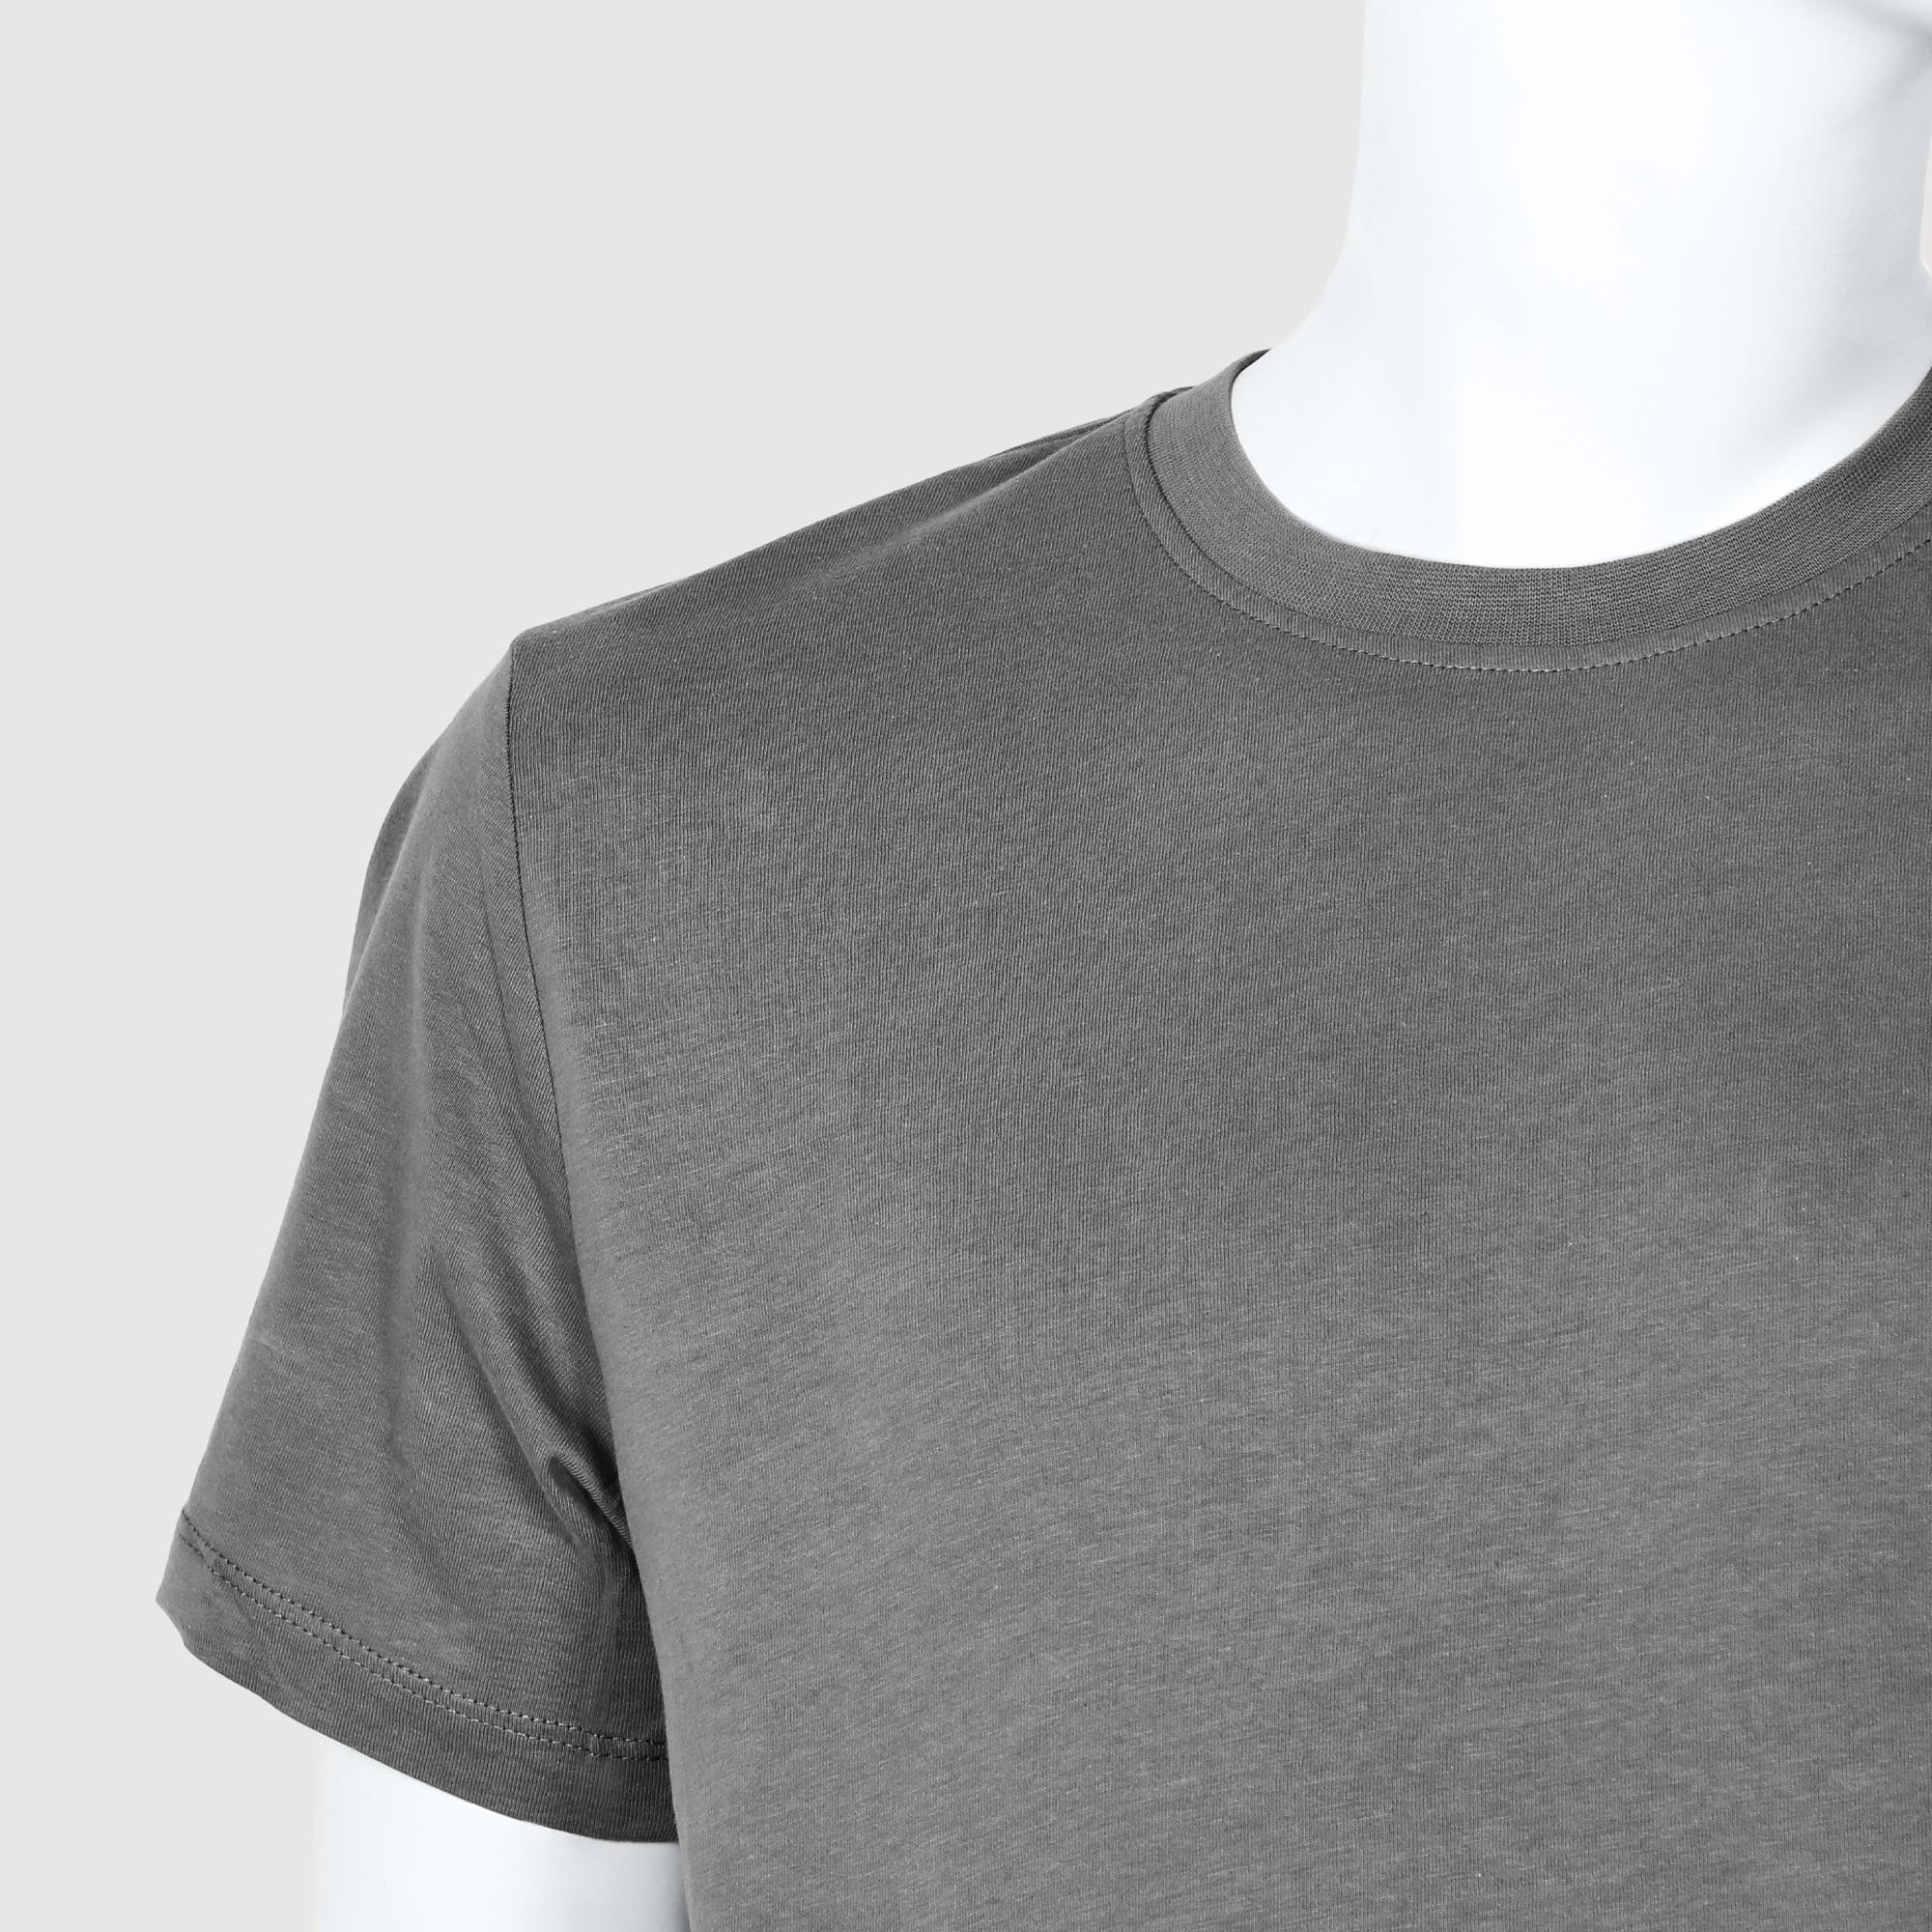 Мужская футболка Diva Teks серая (DTD-04), цвет серый, размер 40-52 - фото 3